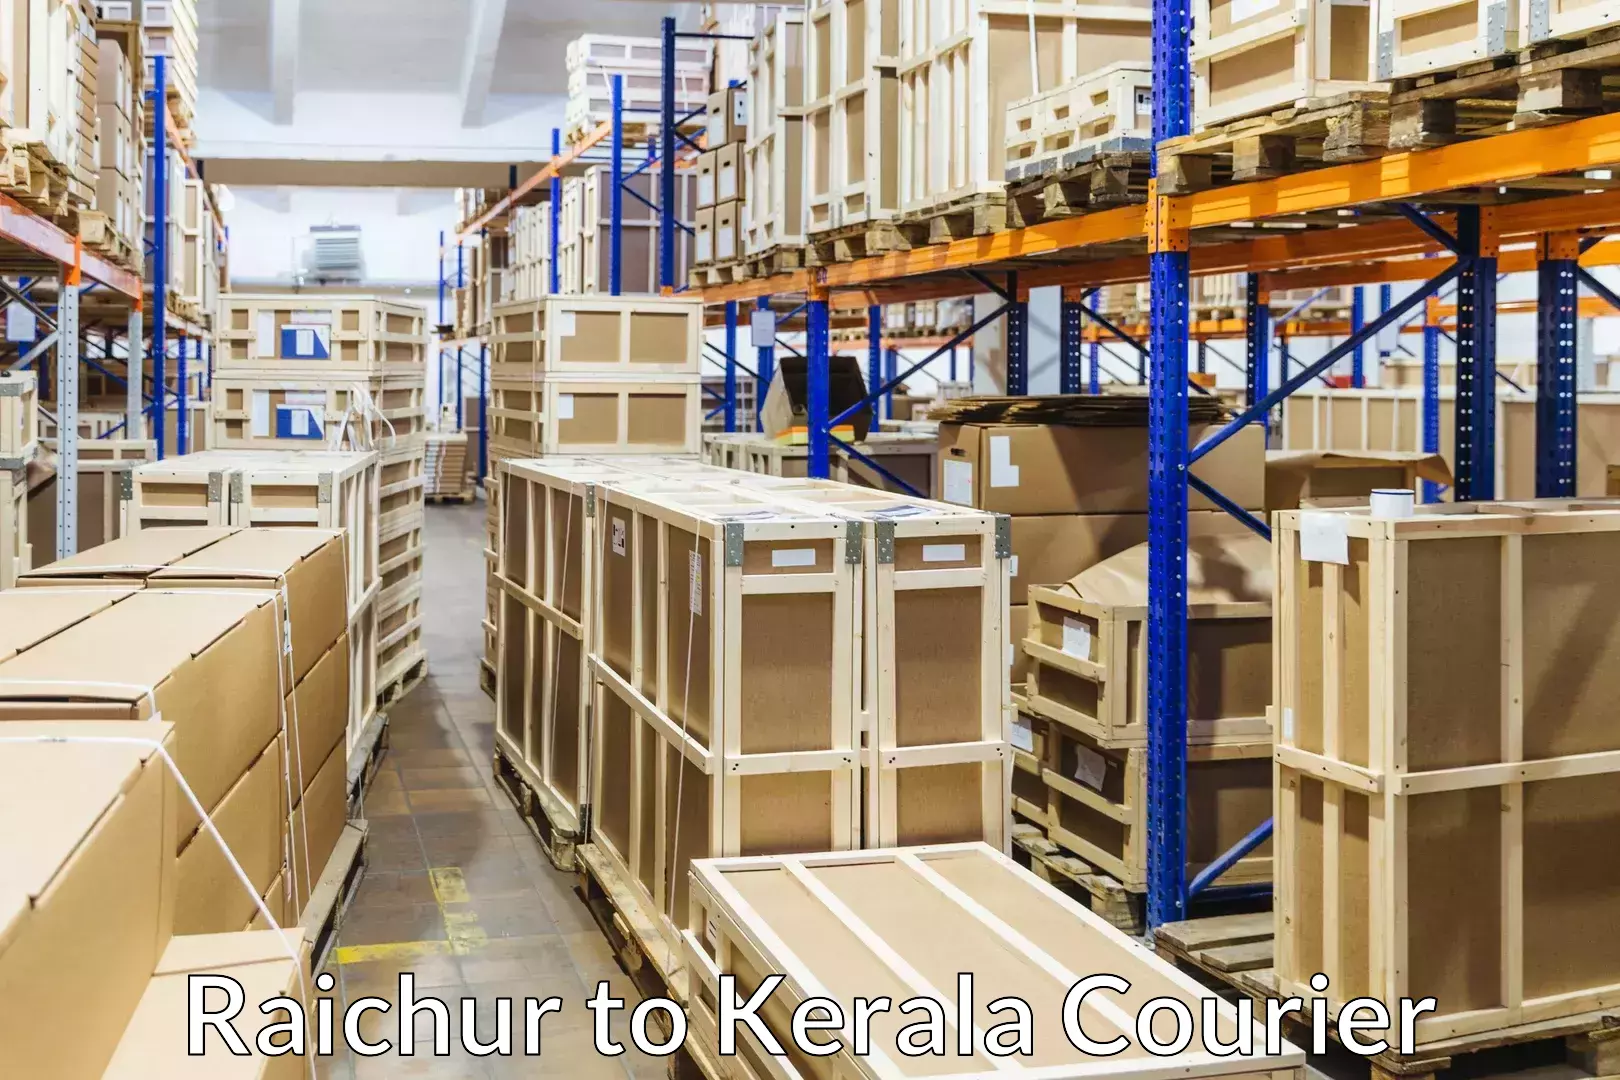 Seamless moving process Raichur to Kerala